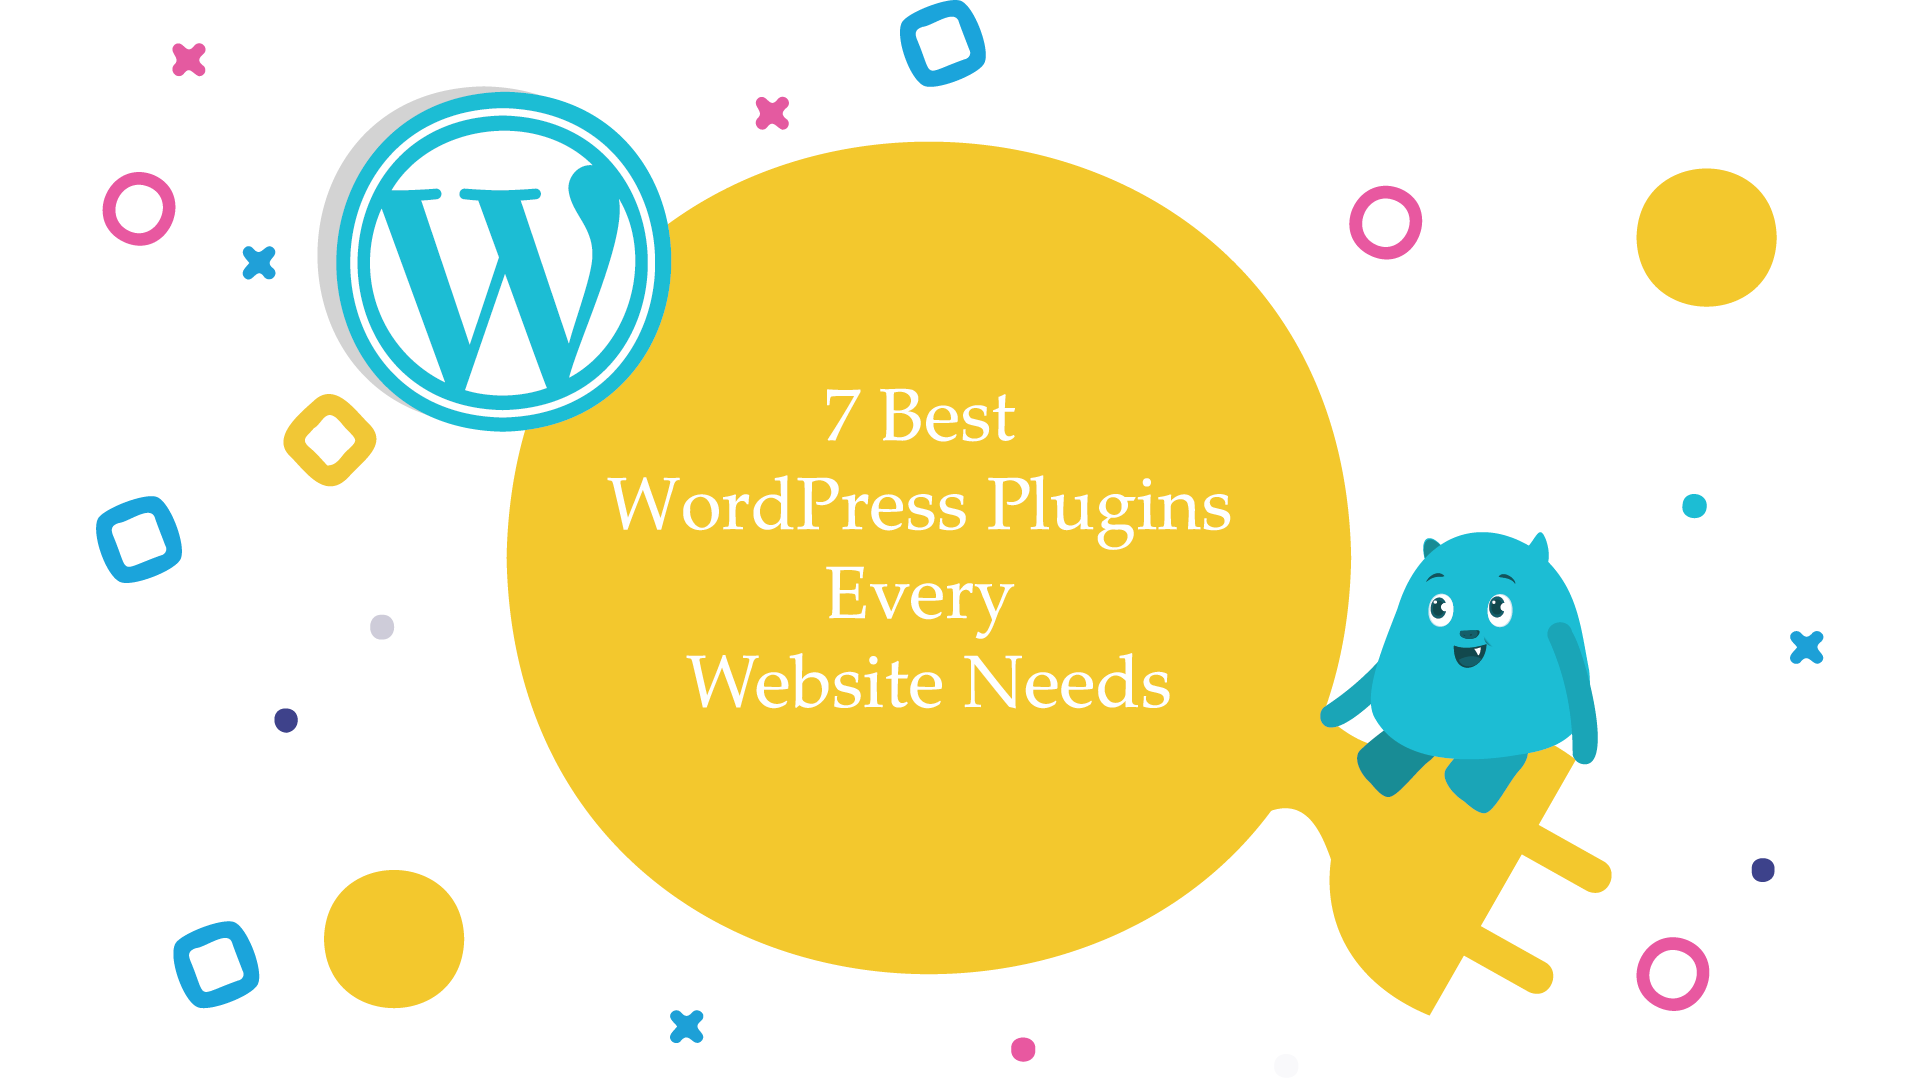 7 Best WordPress Plugins Image